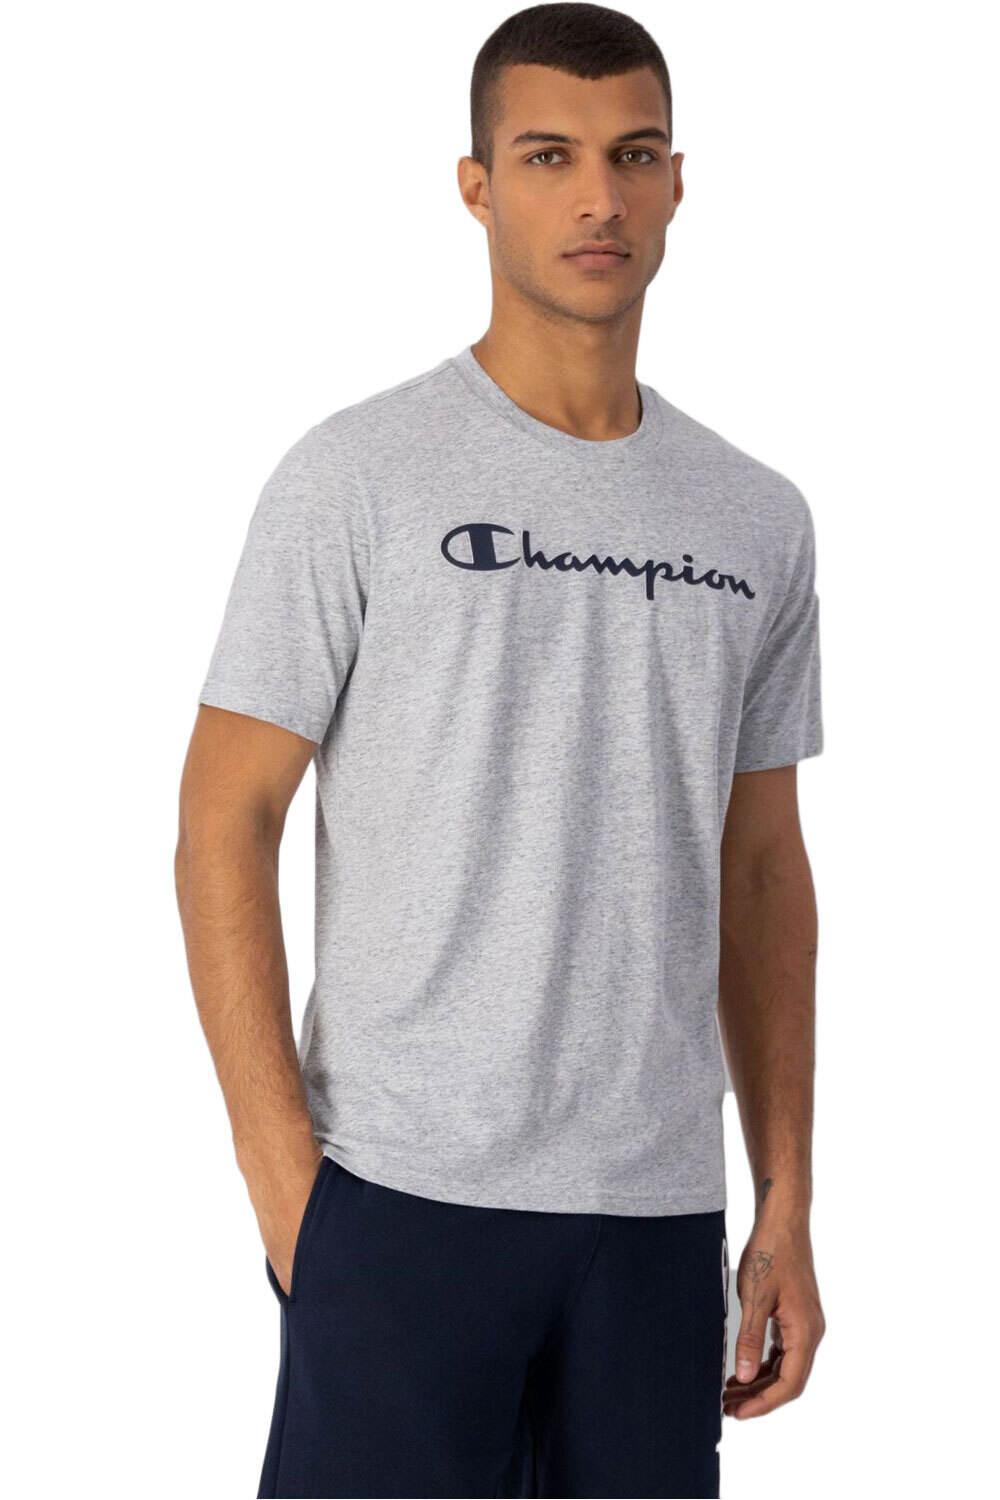 Champion camiseta manga corta hombre CLASSIC T-SHIRT vista frontal